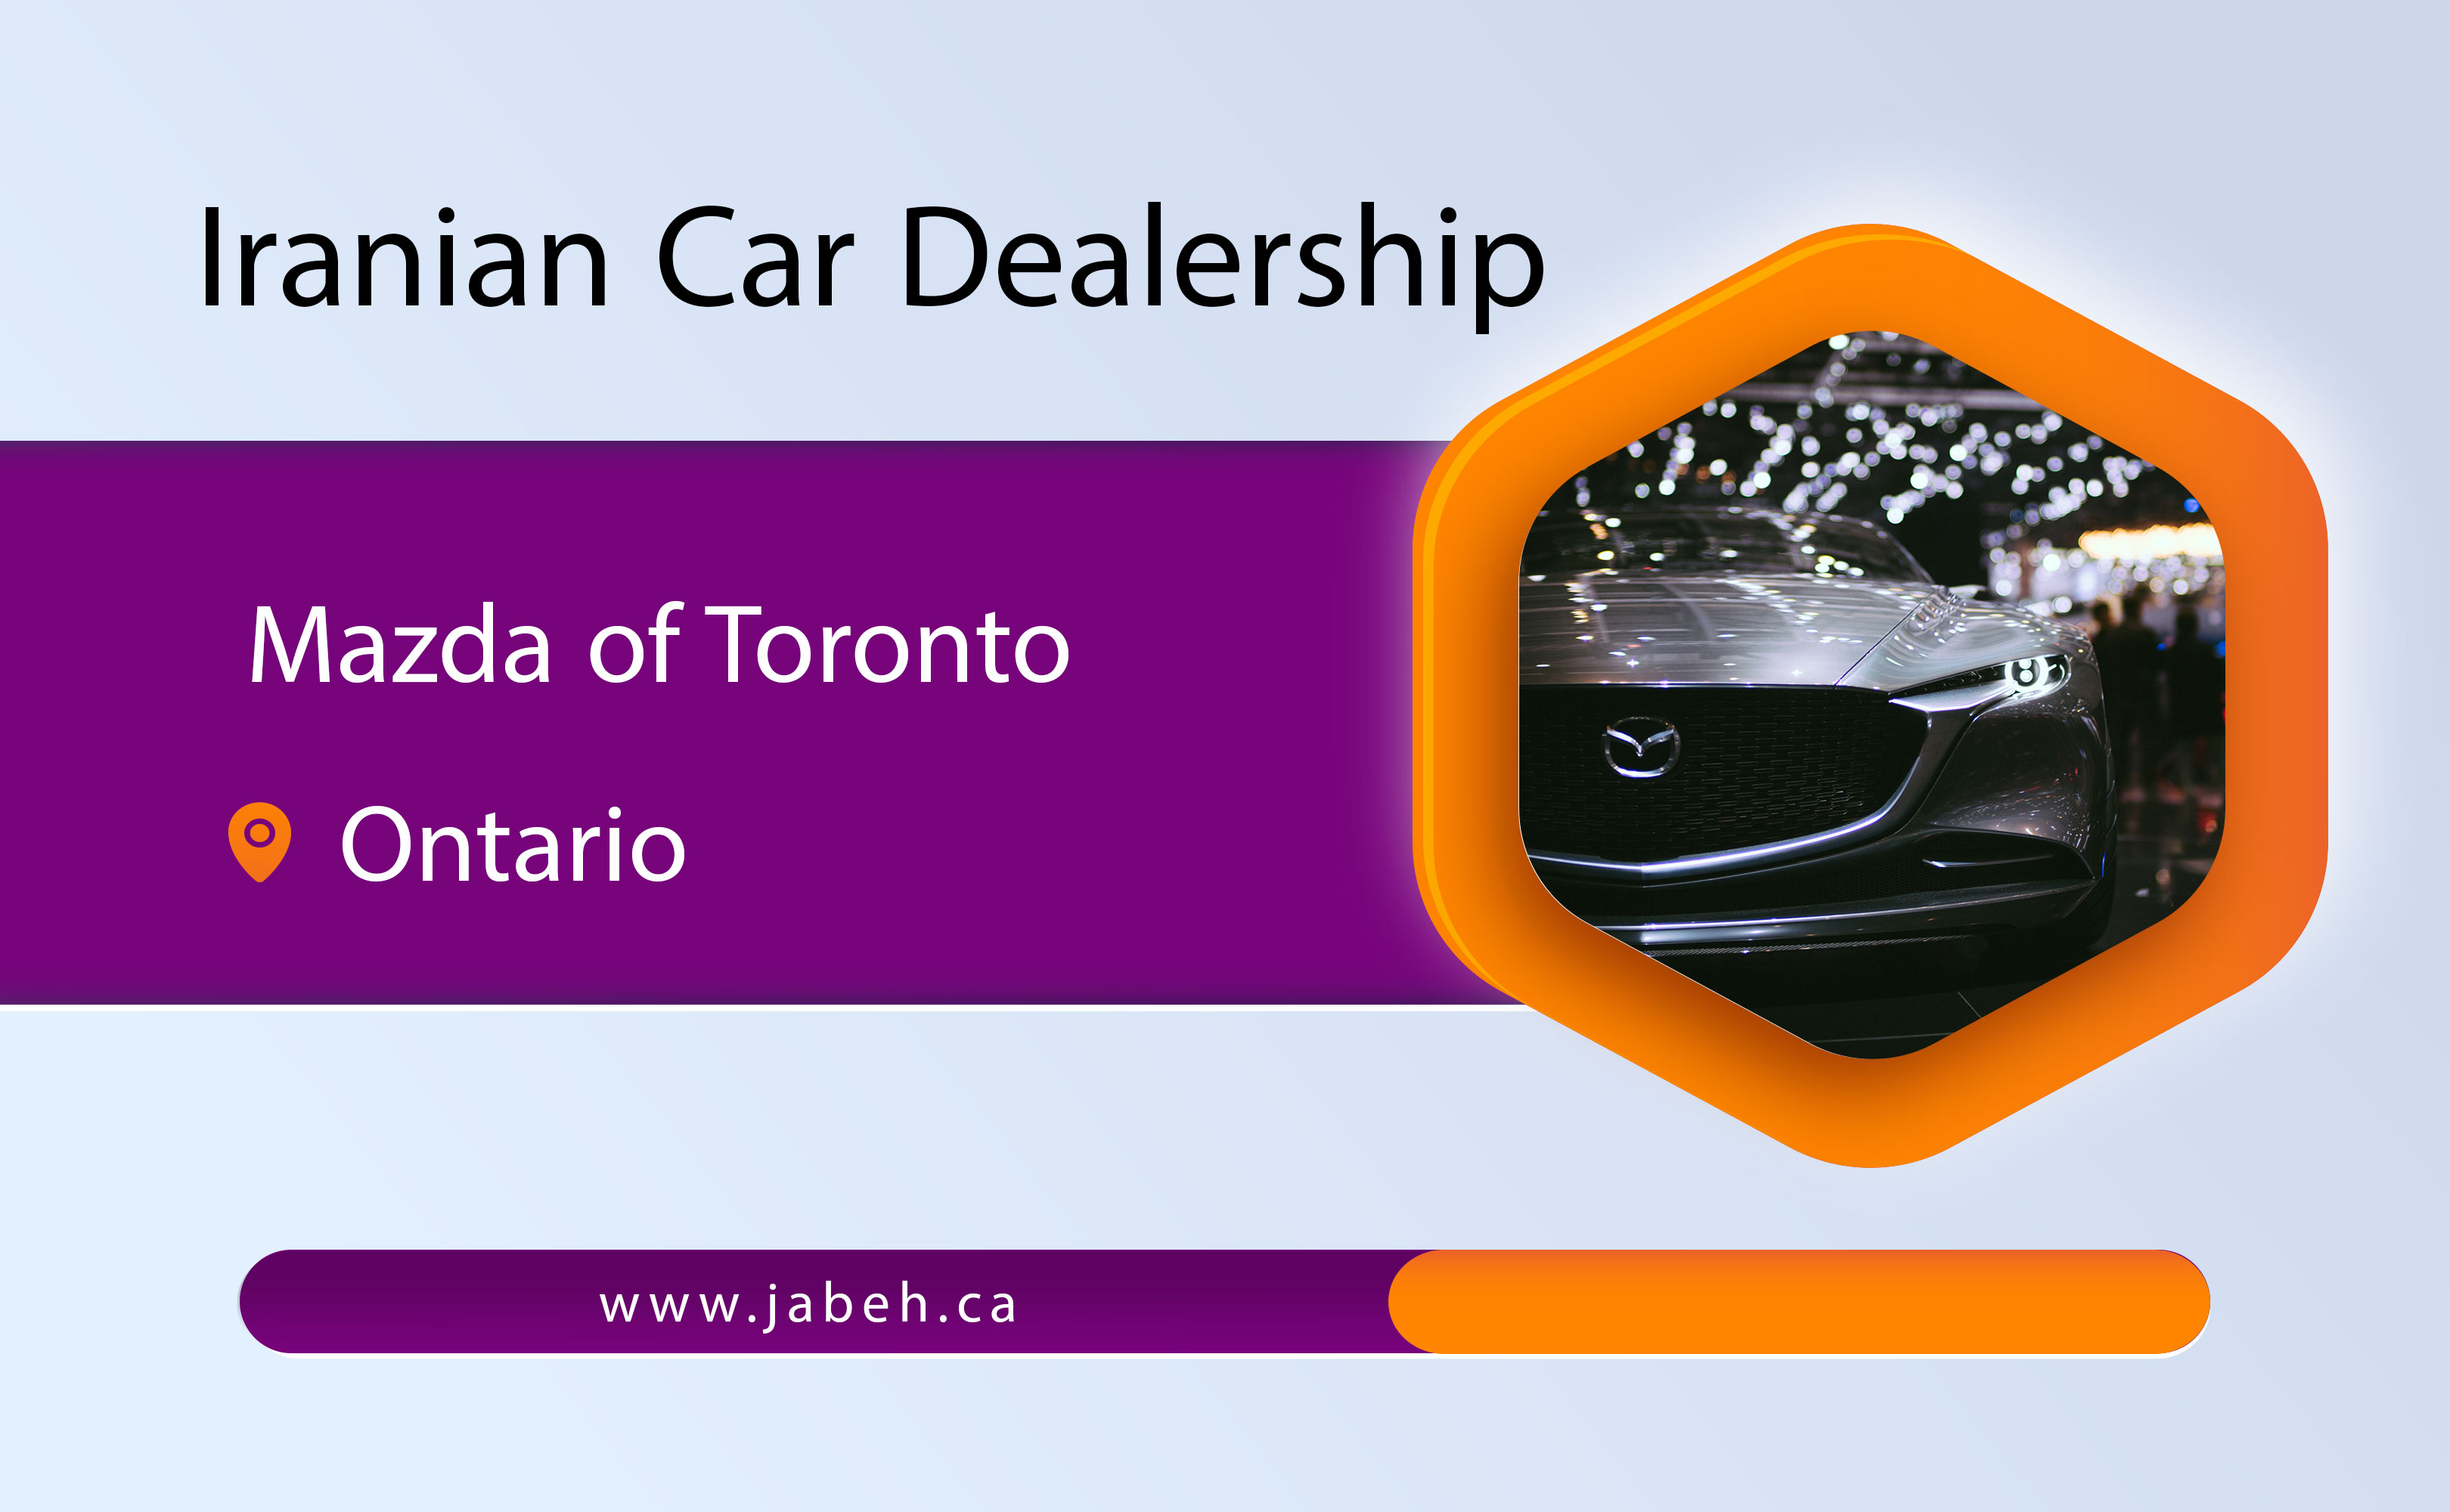 Mazda of Toronto Iranian car dealership in Ontario